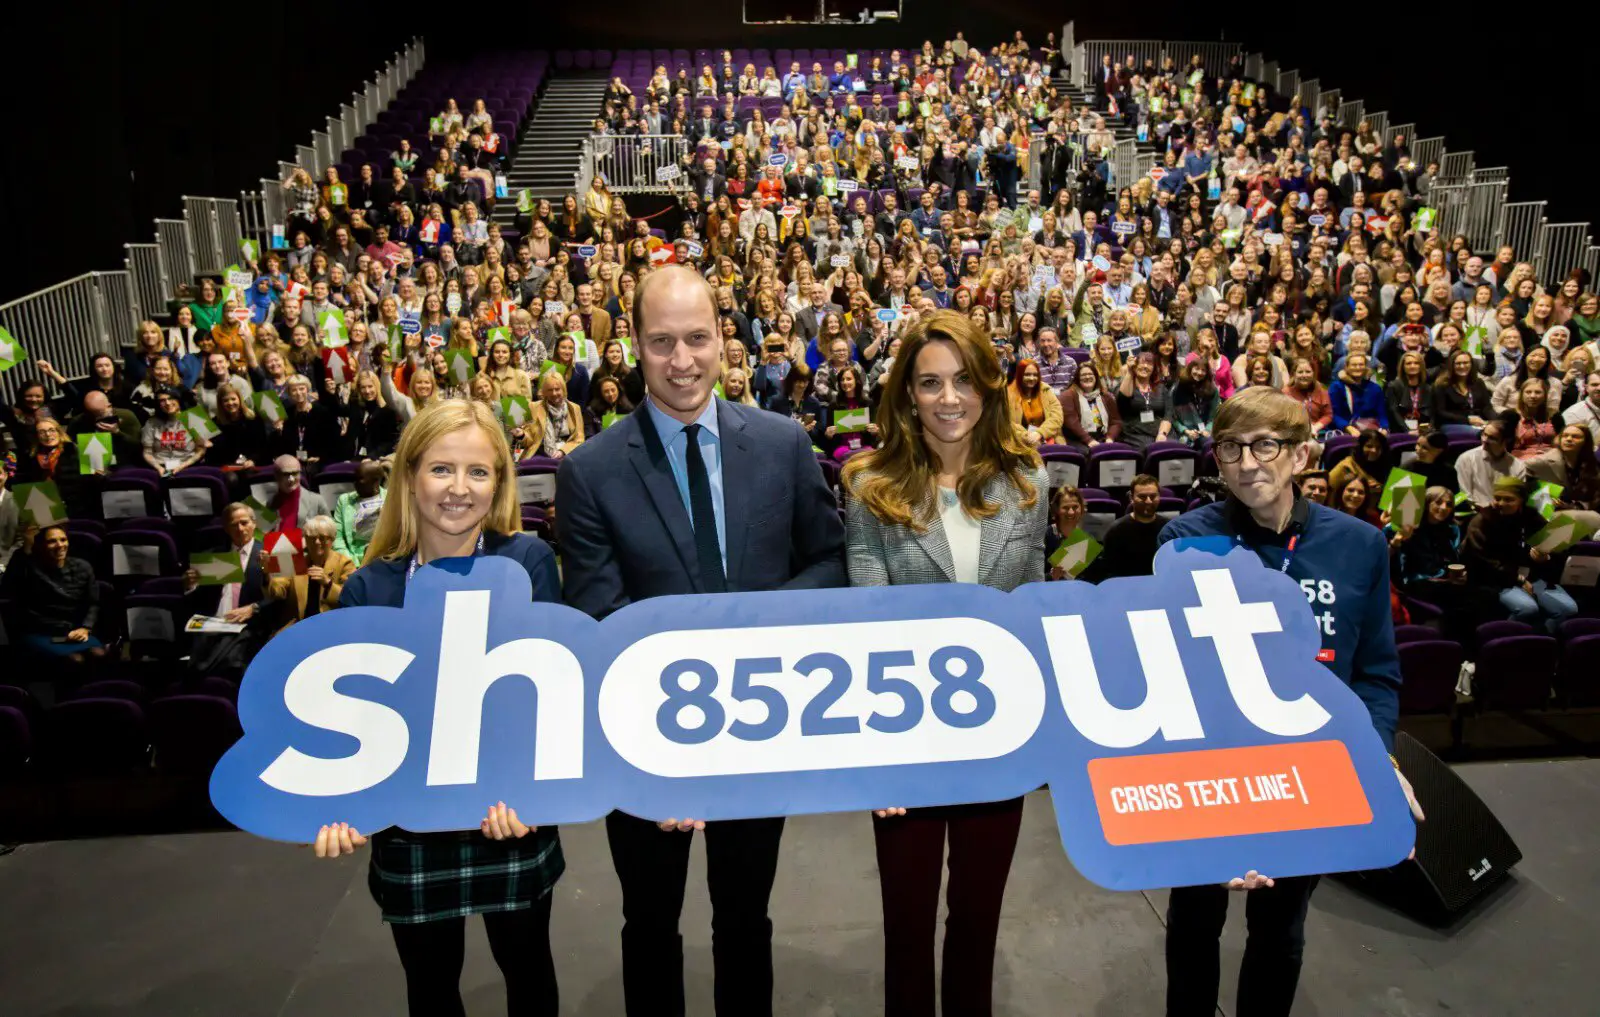 Duke and Duchess of Cambridge attended the Shout UK volunteer celebration